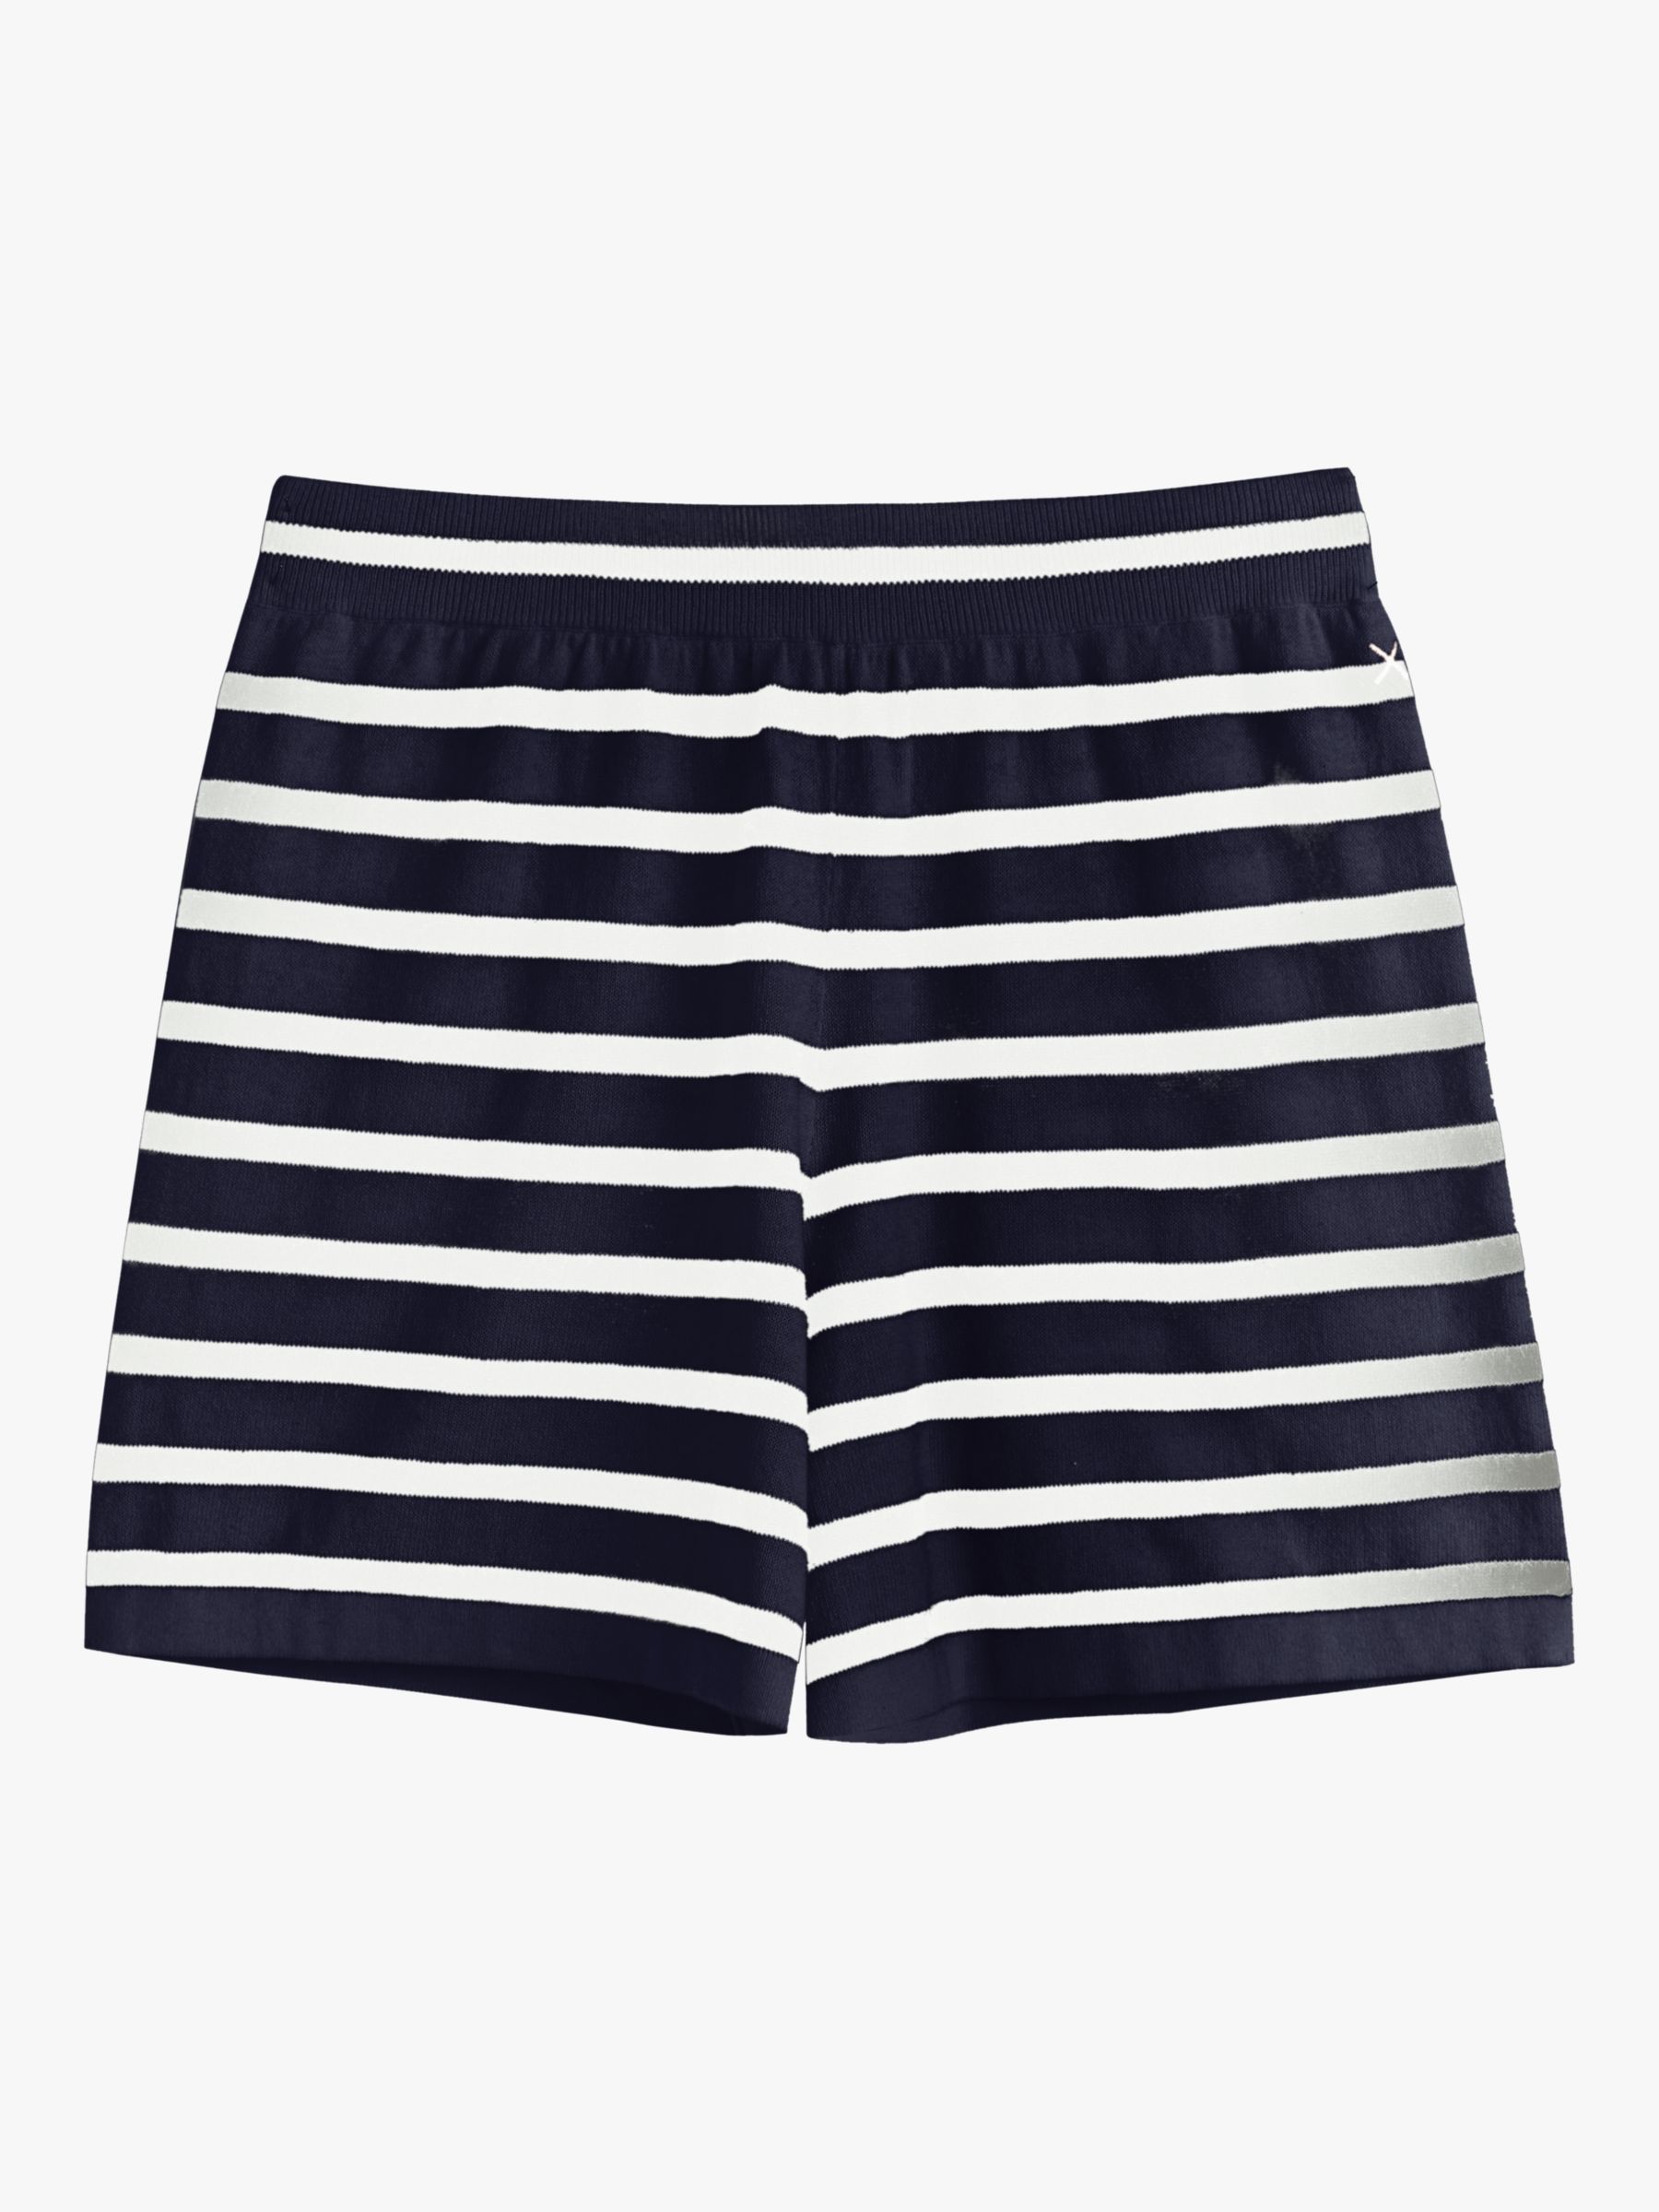 Chinti & Parker Summer Breton Stripe Shorts, Navy/Cream, XS